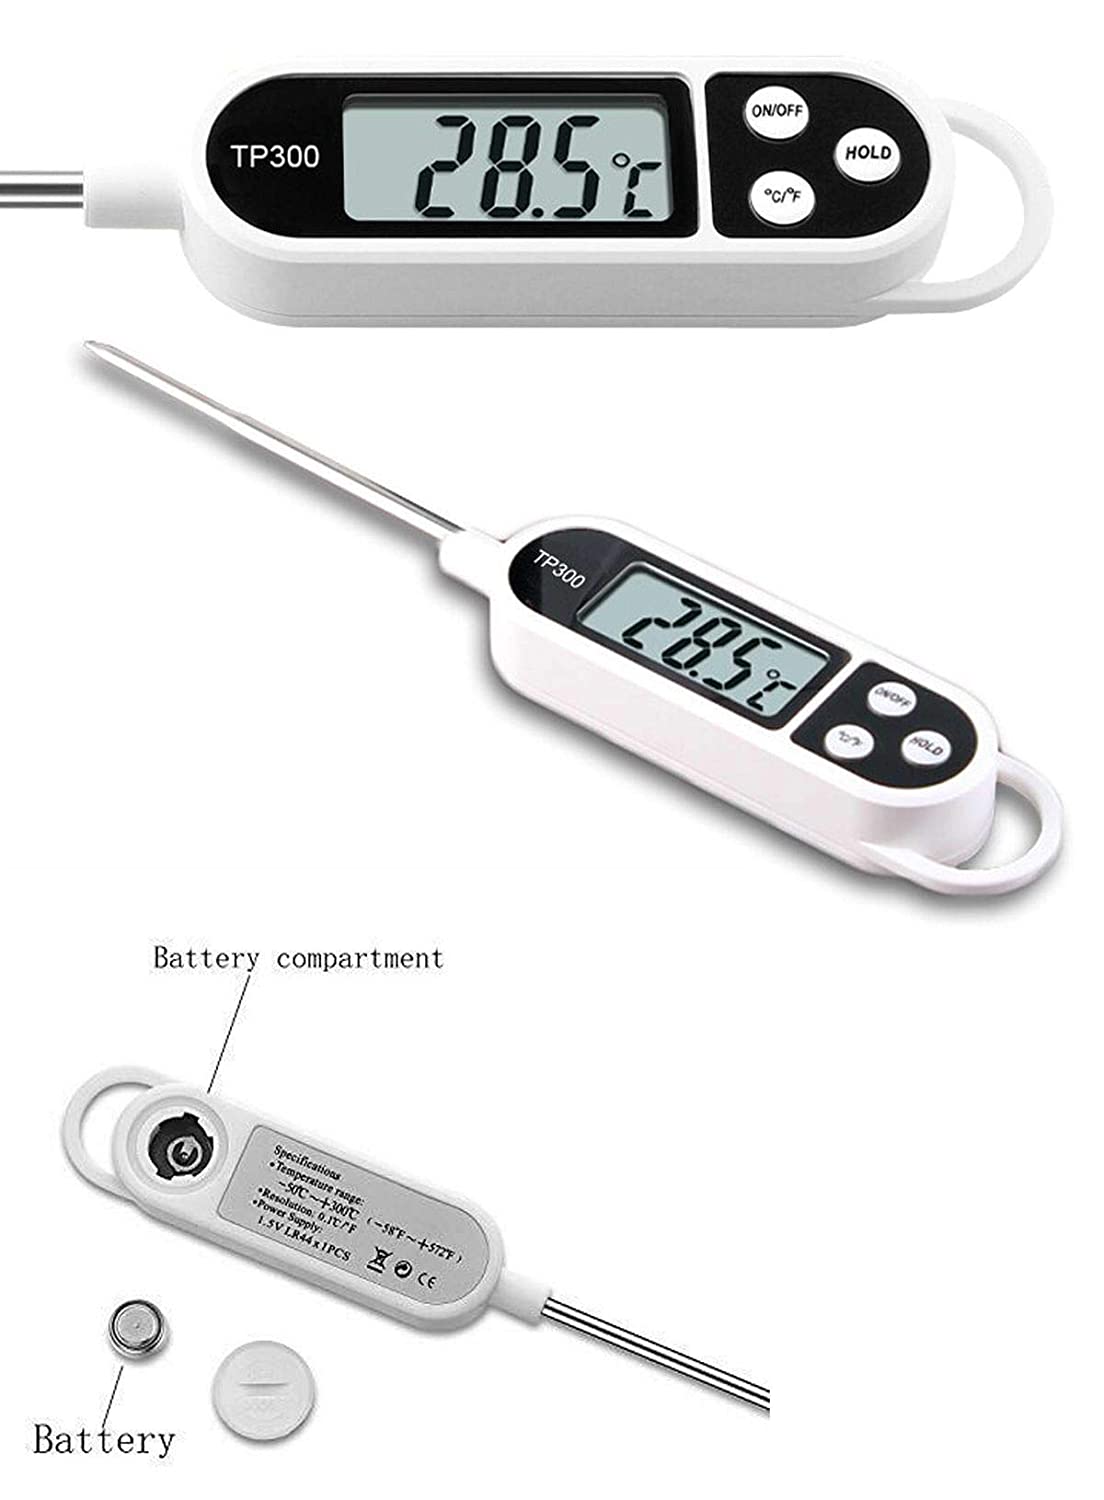 Digital Thermometer Tp-300 (Range-50 C to 300 C)